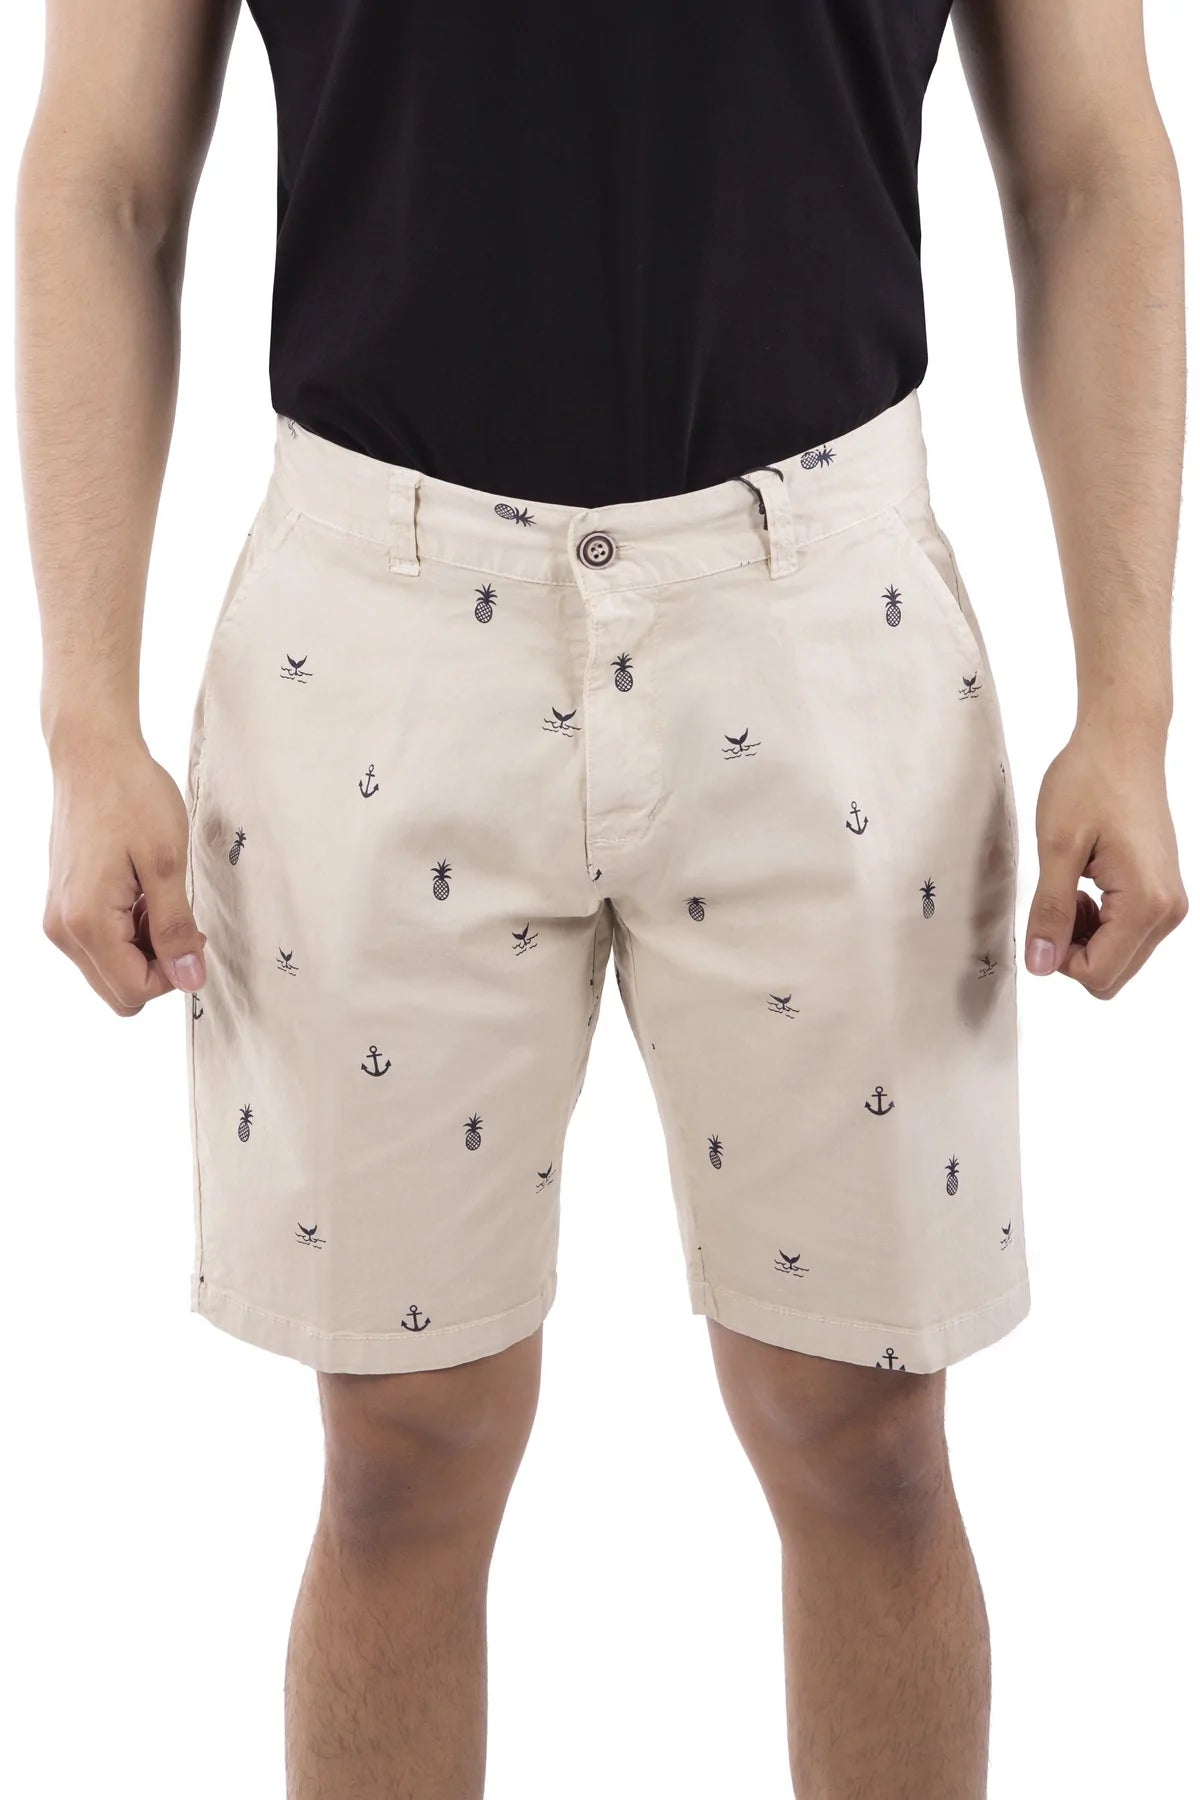 Nautical Men's Shorts